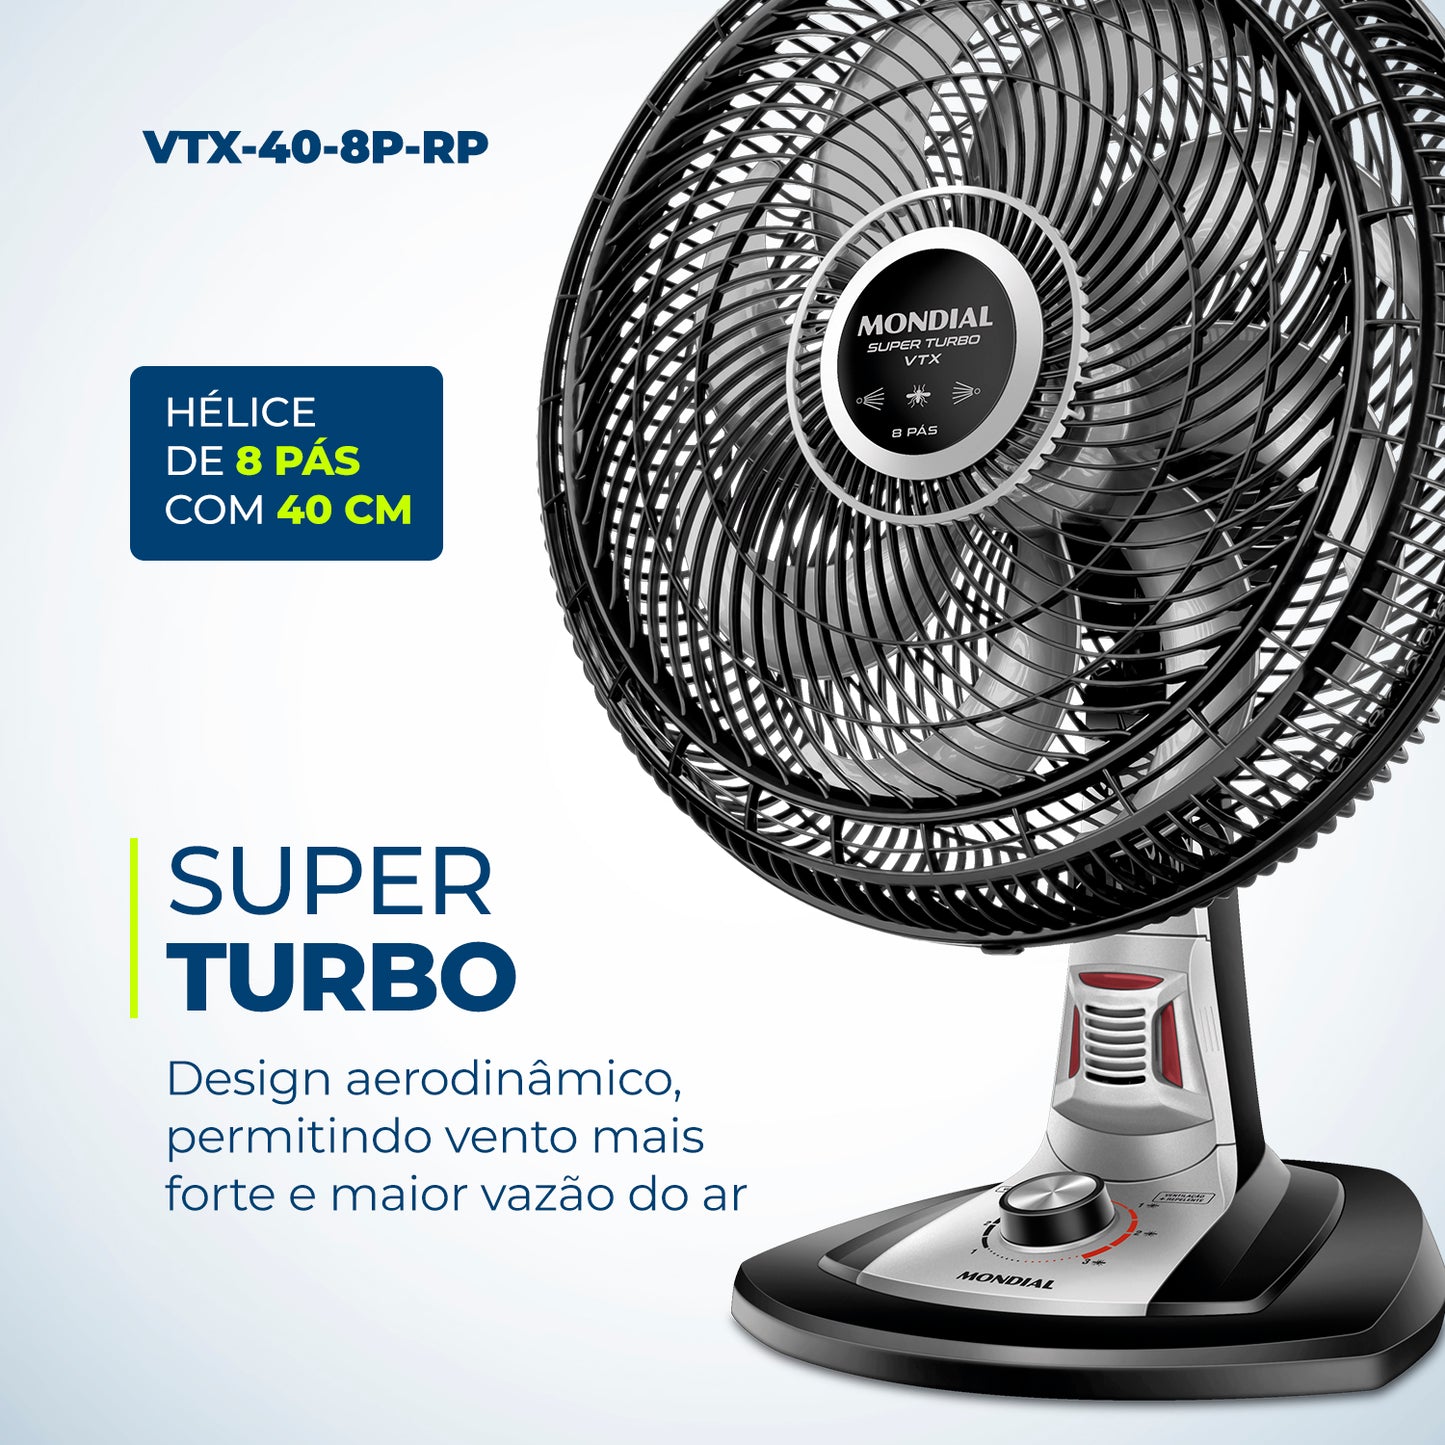 Ventilador De Mesa Mondial Vtx-40-8p-rp Super Turbo 40cm 220v